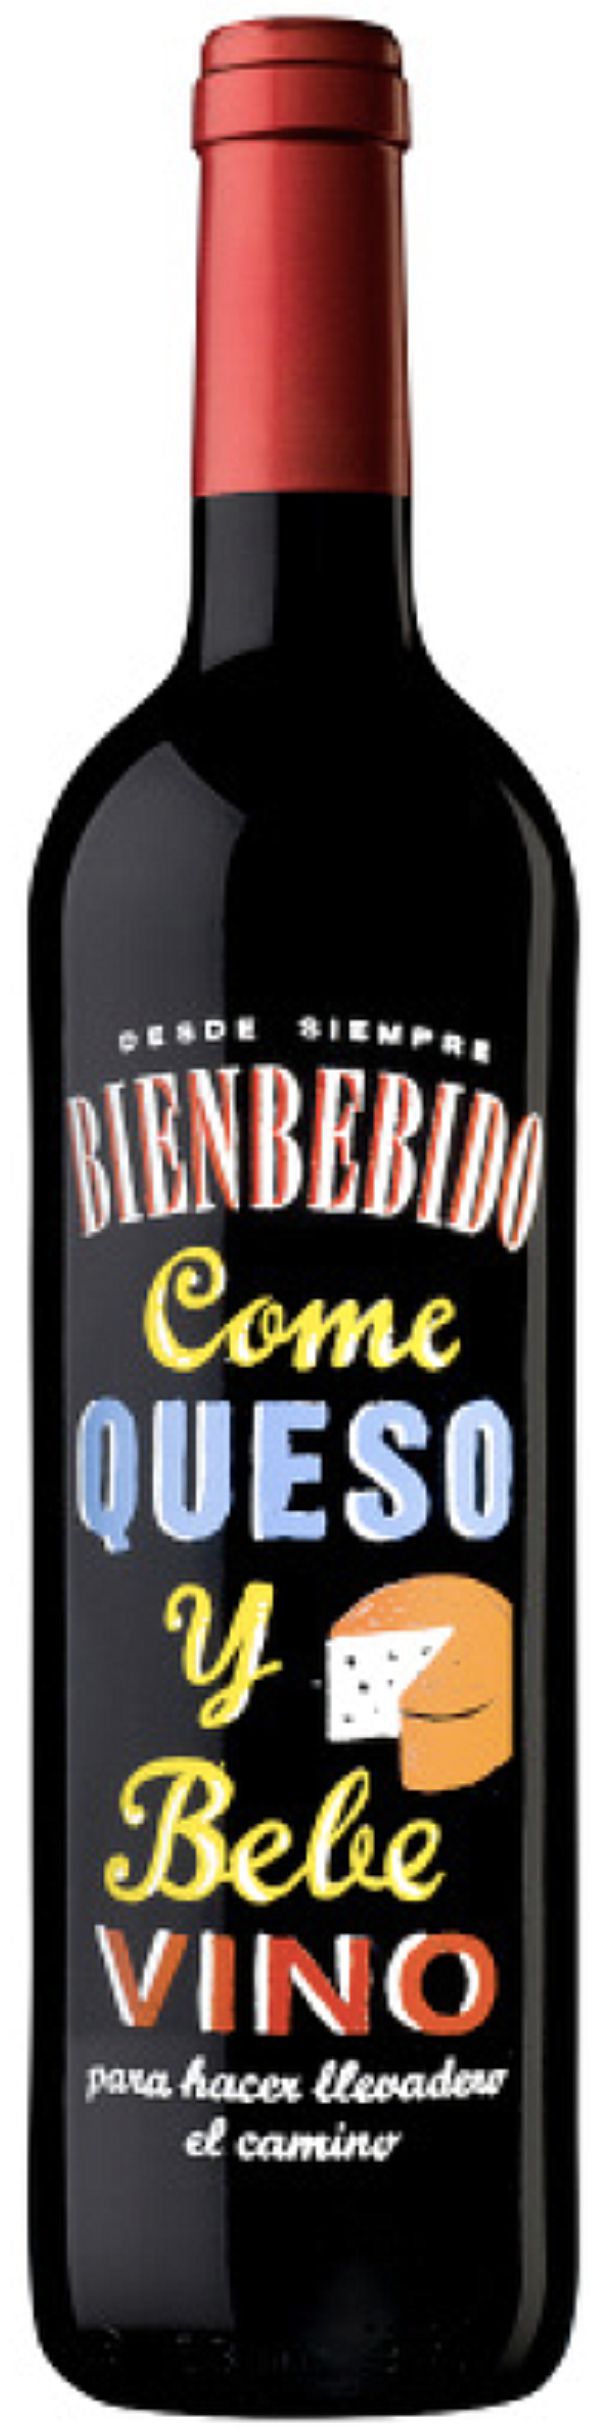 Вино "Бьенбебидо Коме и Бебе Вака Вино" столовое  красное сухое креп 13,5%, емк 0,75л